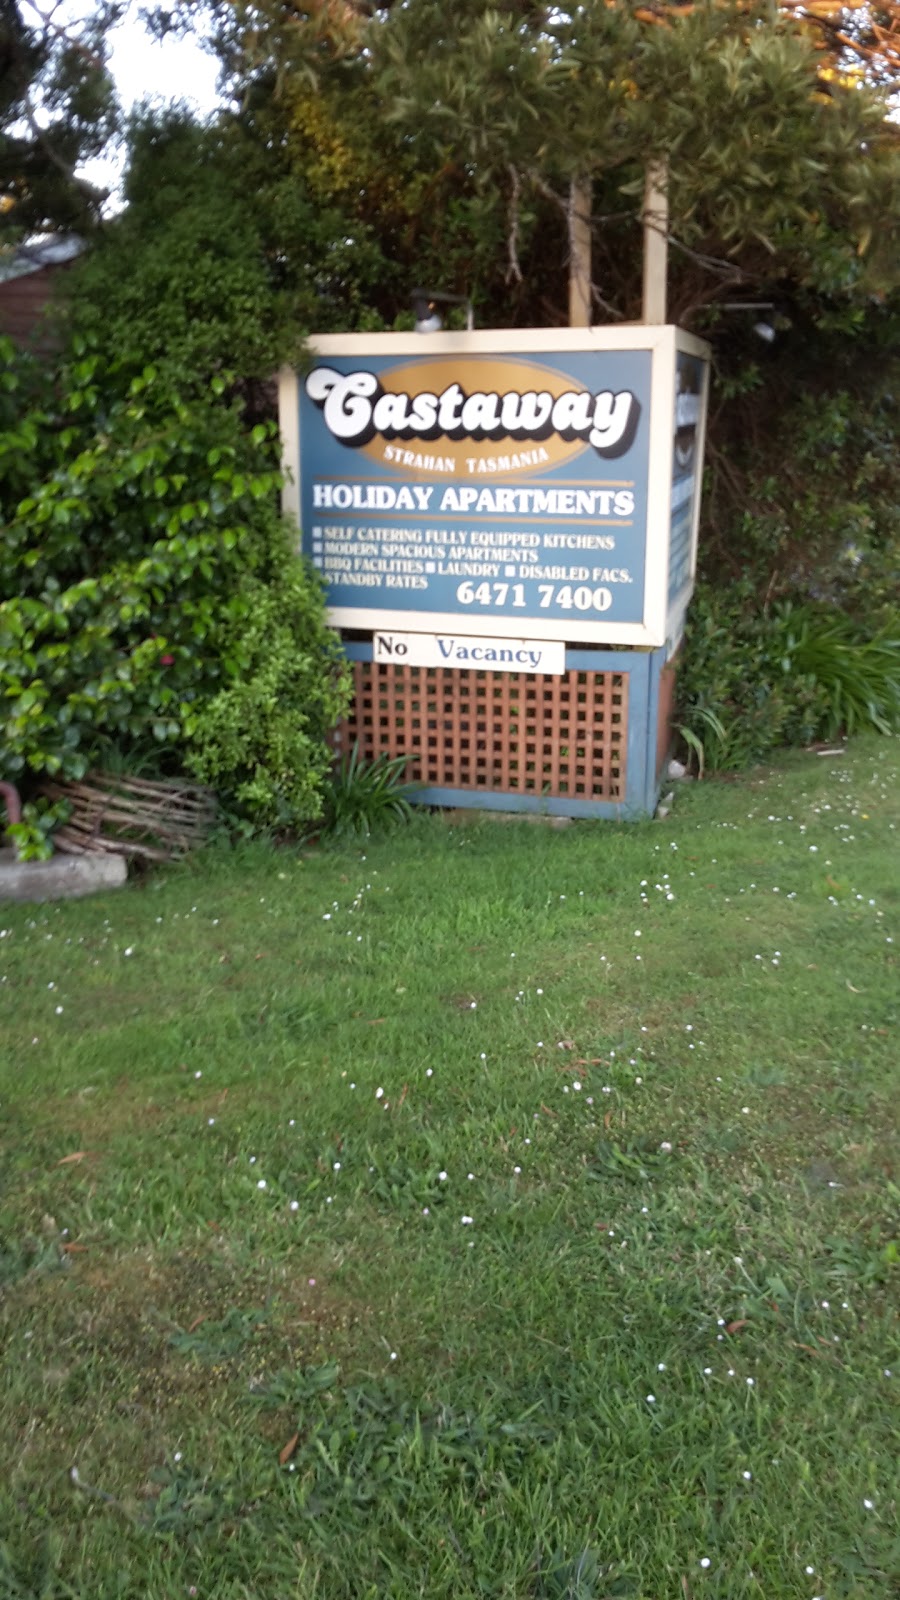 Castaway Holiday Apartments | lodging | 12 Harvey St, Strahan TAS 7468, Australia | 0364717400 OR +61 3 6471 7400